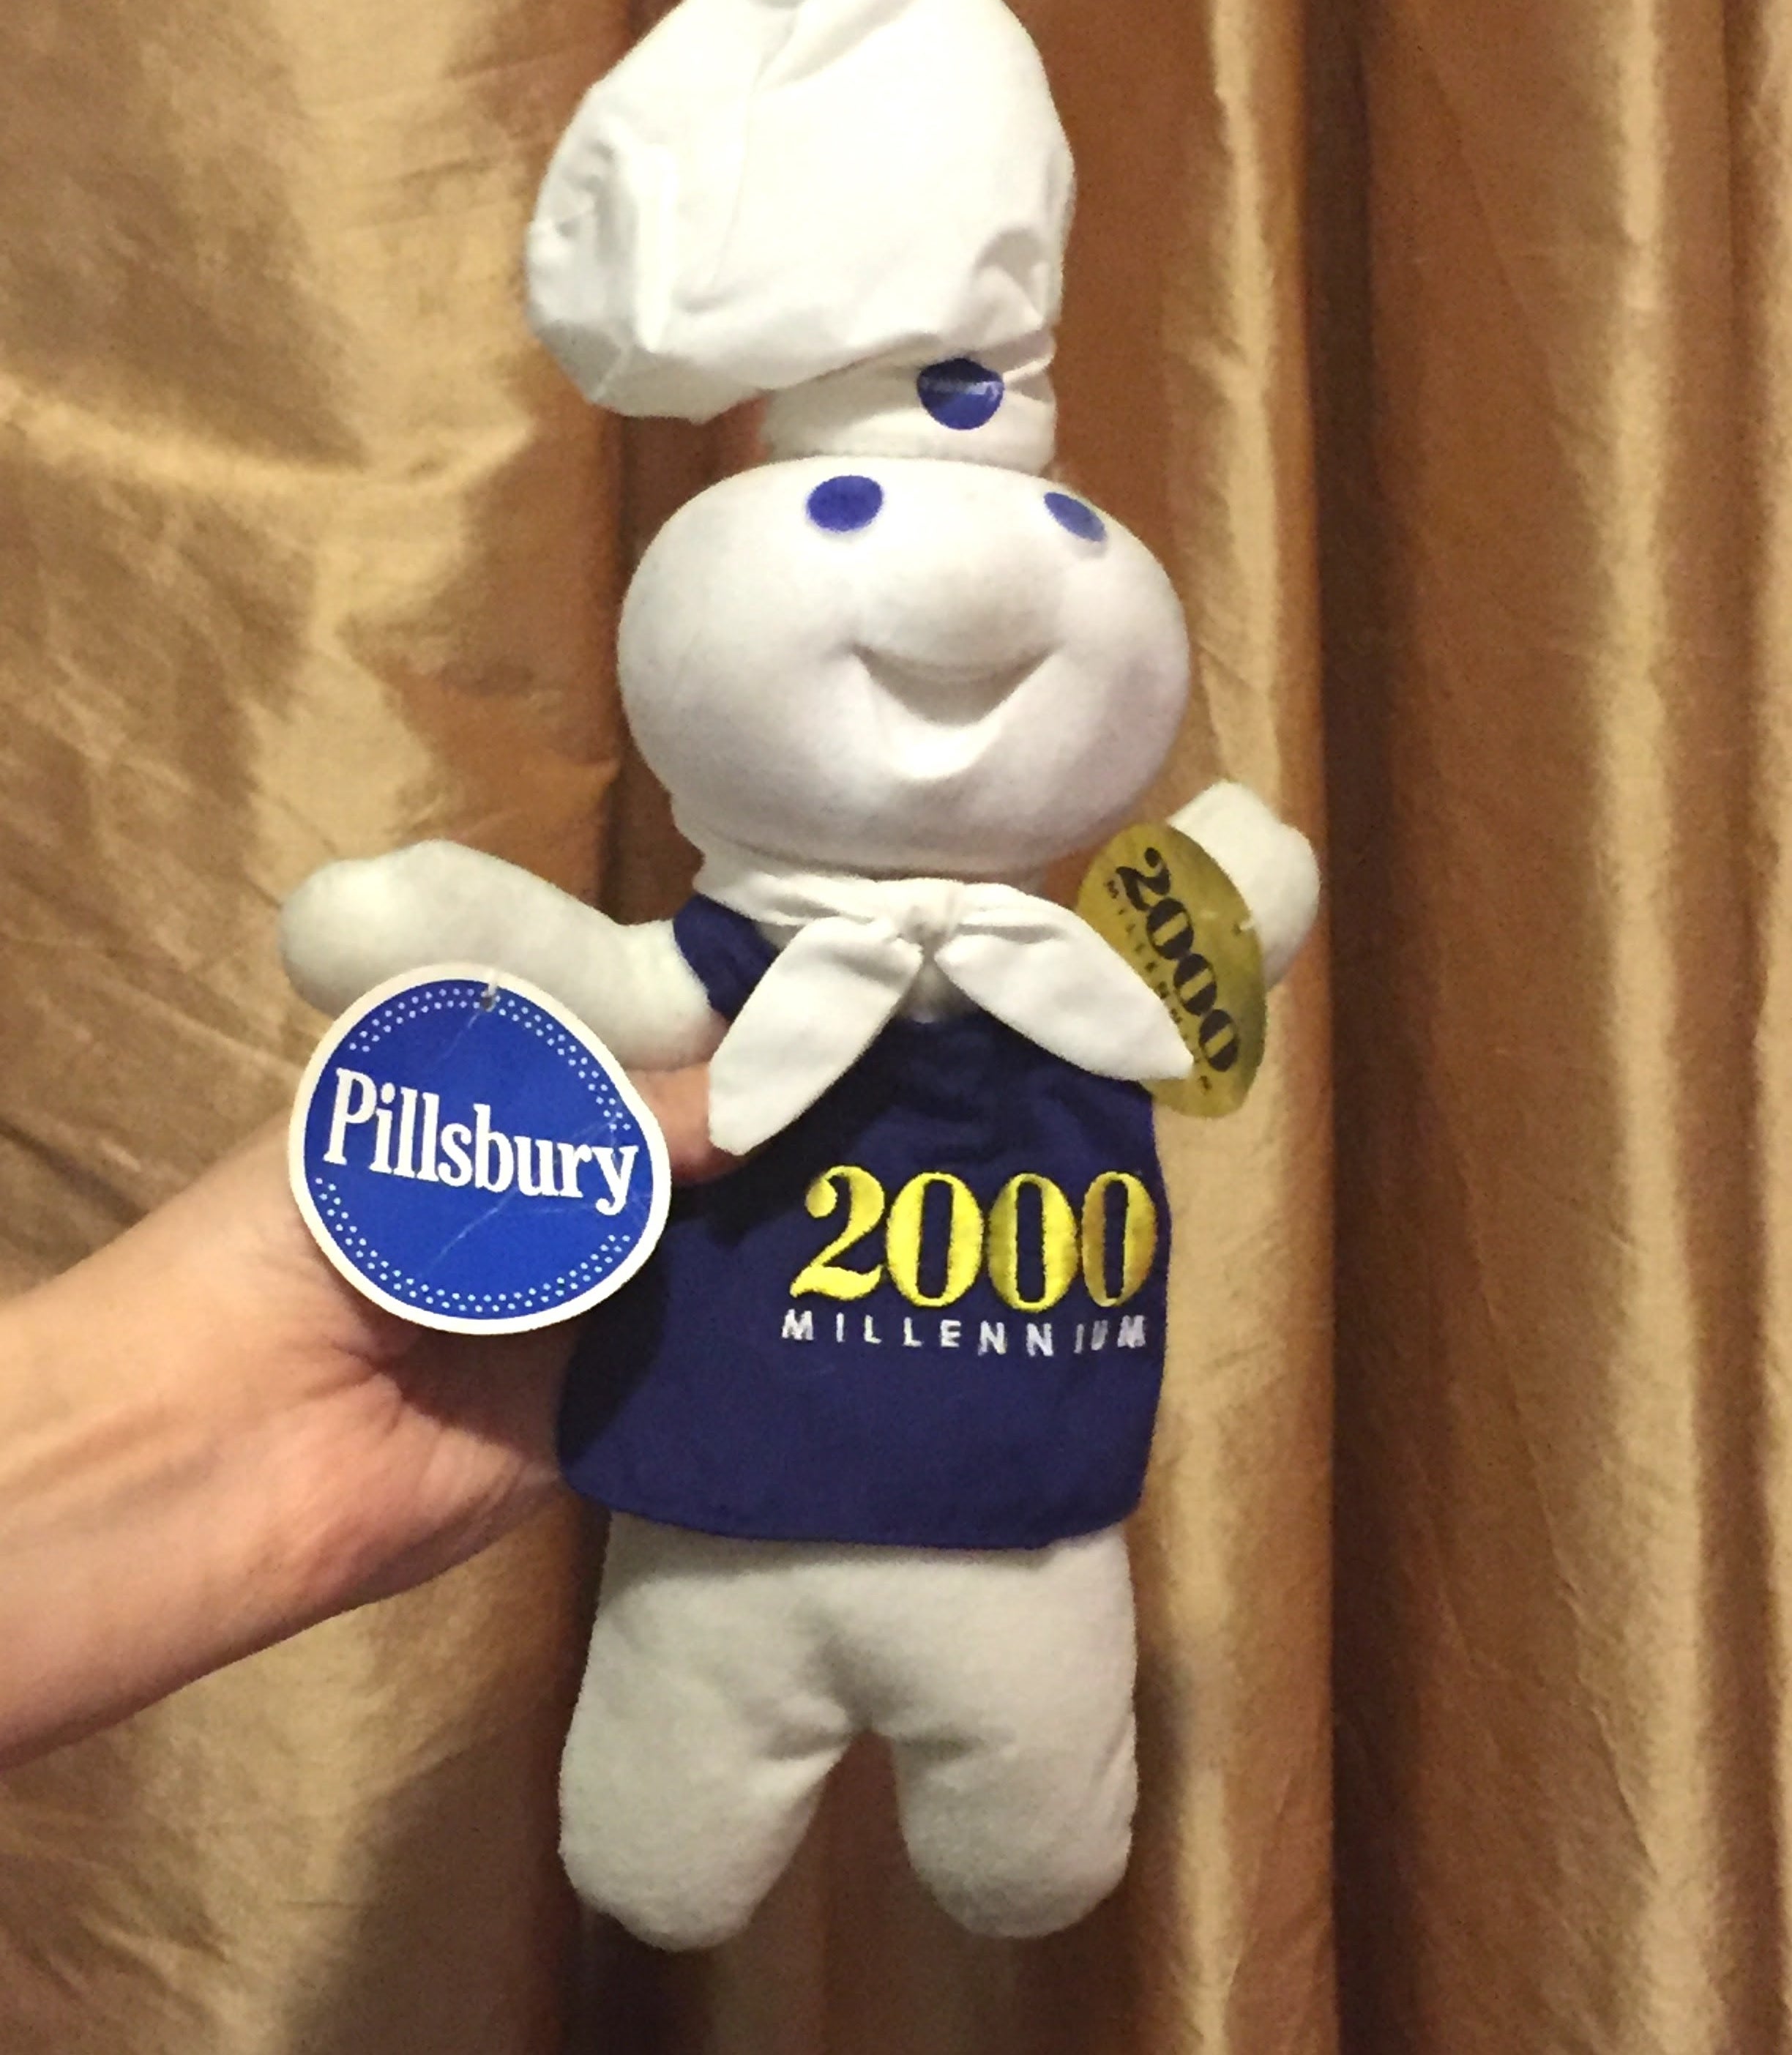 the pillsbury dough boy in a 2000 milennium shirt